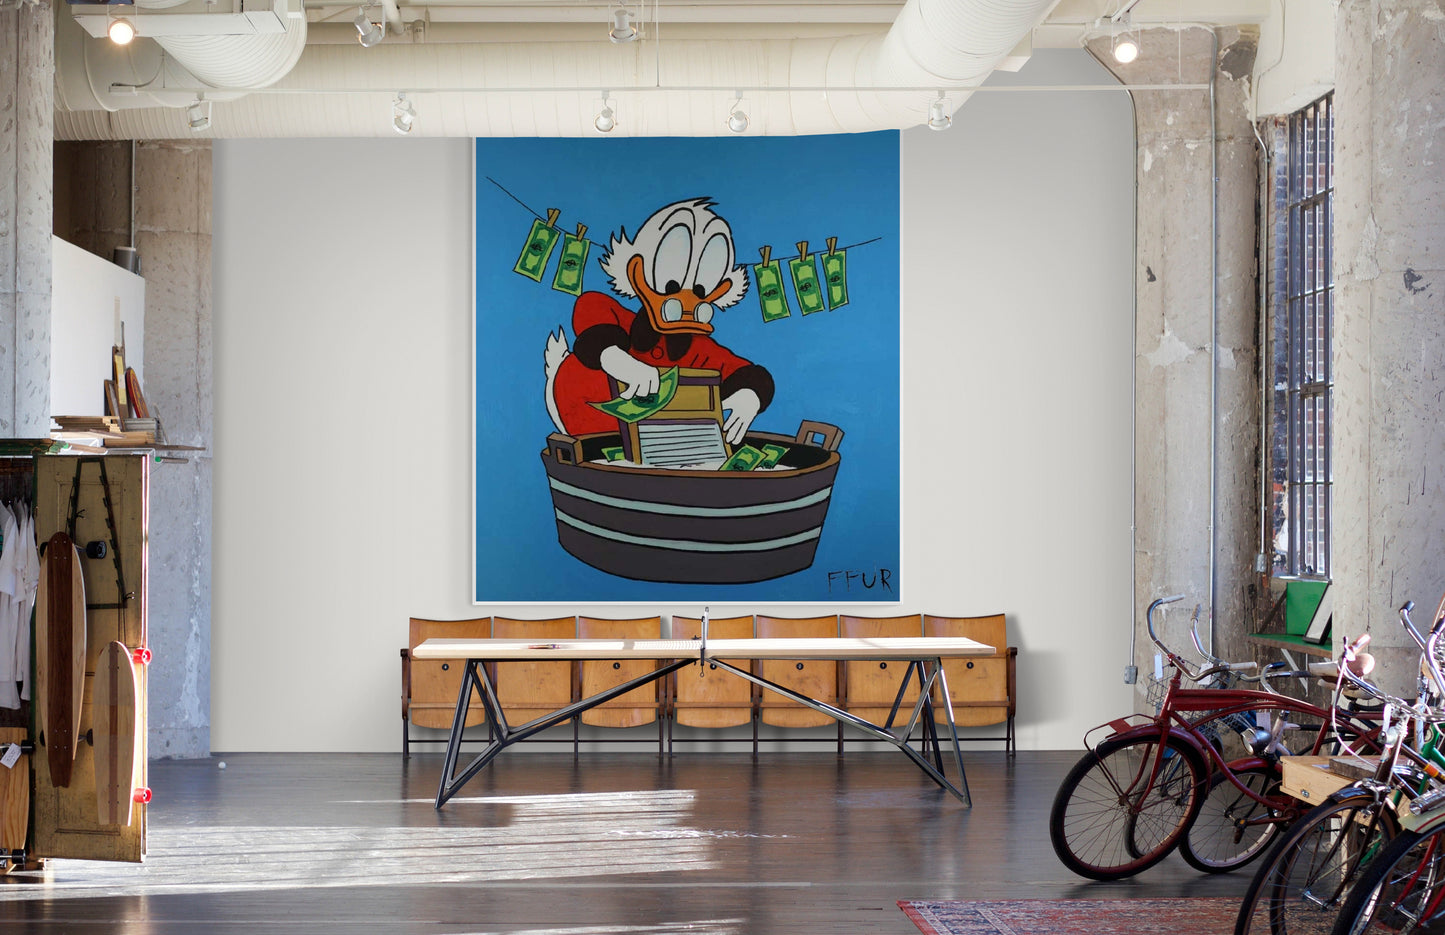 Scrooge McDuck Canvas - "Dirty Money" by FFUR